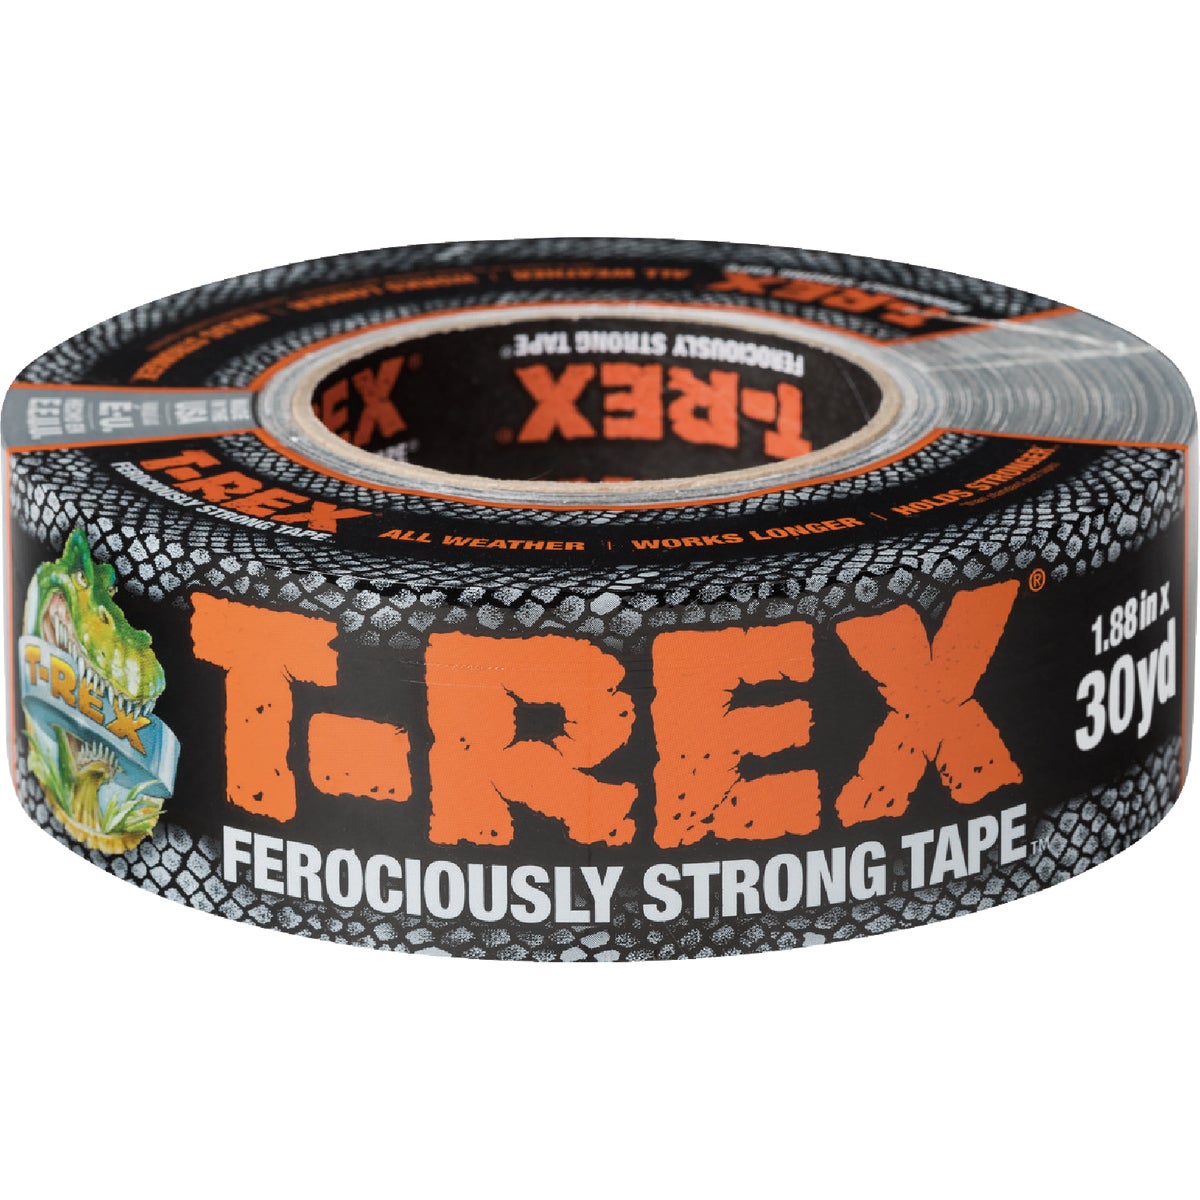 T-REX 1.88 In. x 30 Yd. Duct Tape, Gray